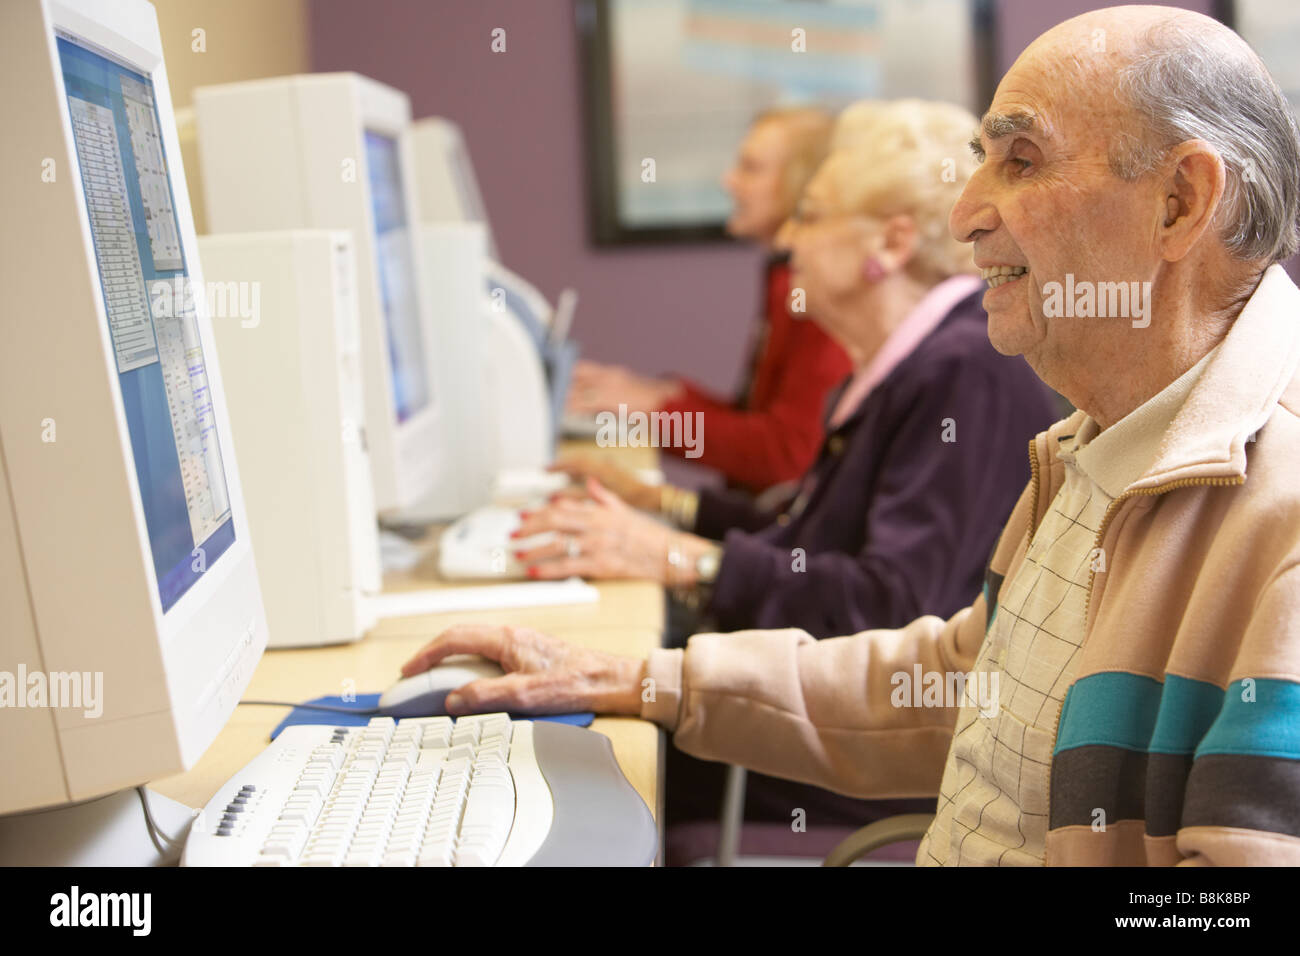 Senior man using computer Stock Photo